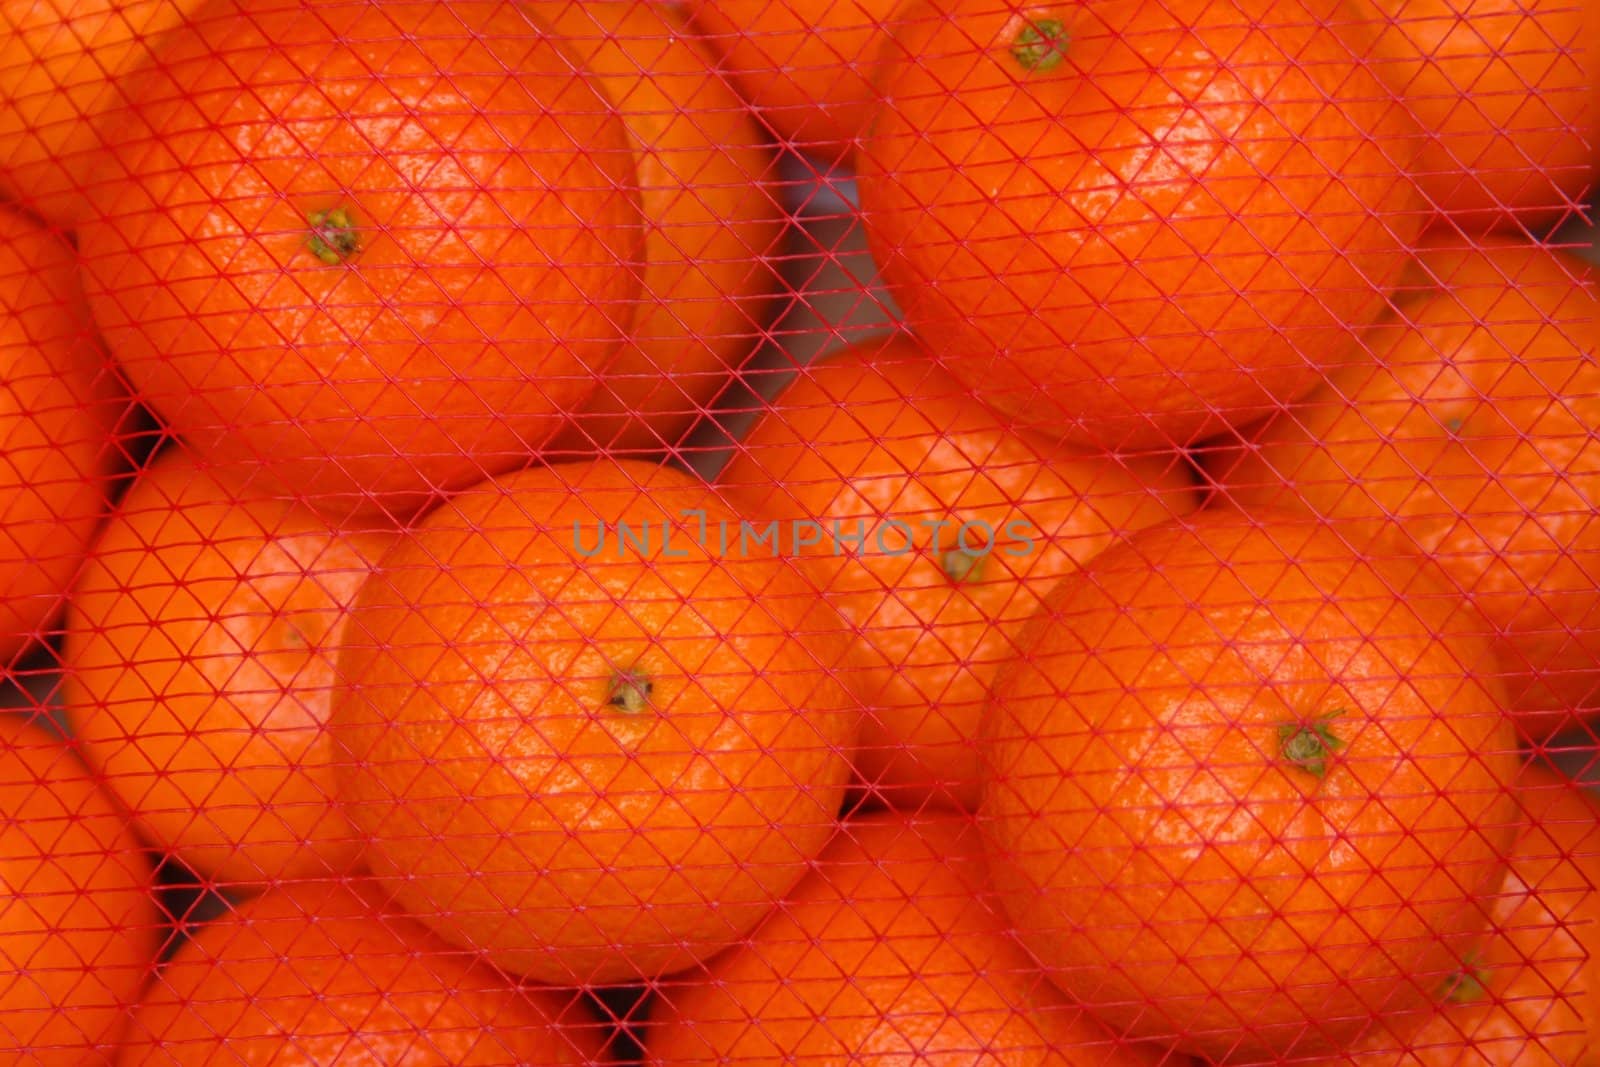 Mandarin oranges by Yaurinko